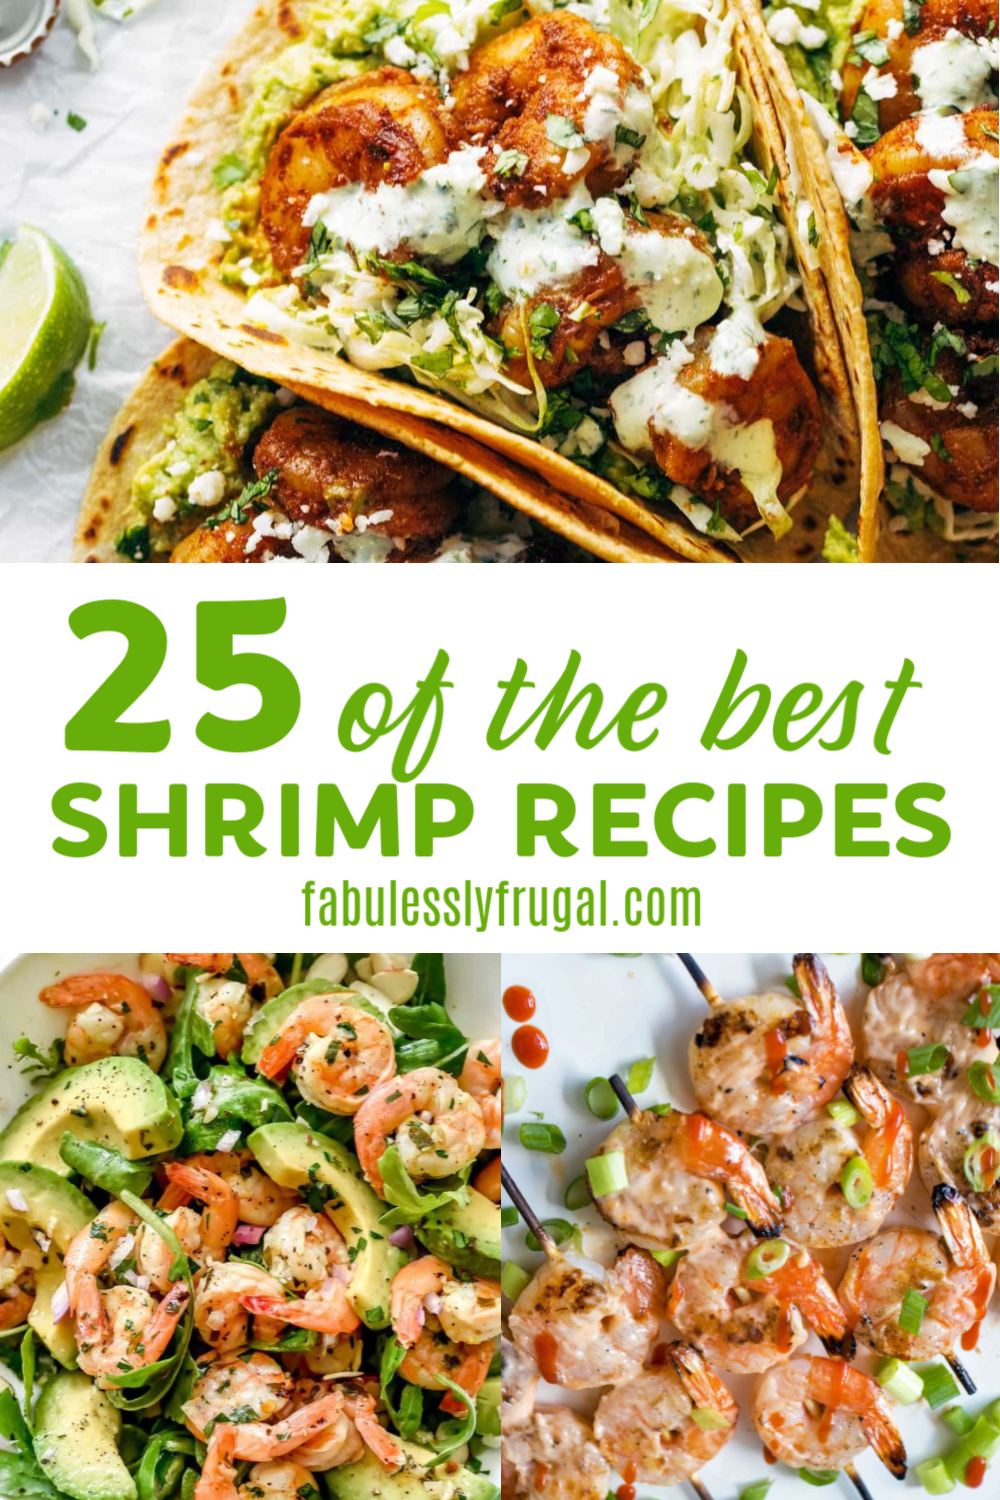 25 of the best shrimp recipes